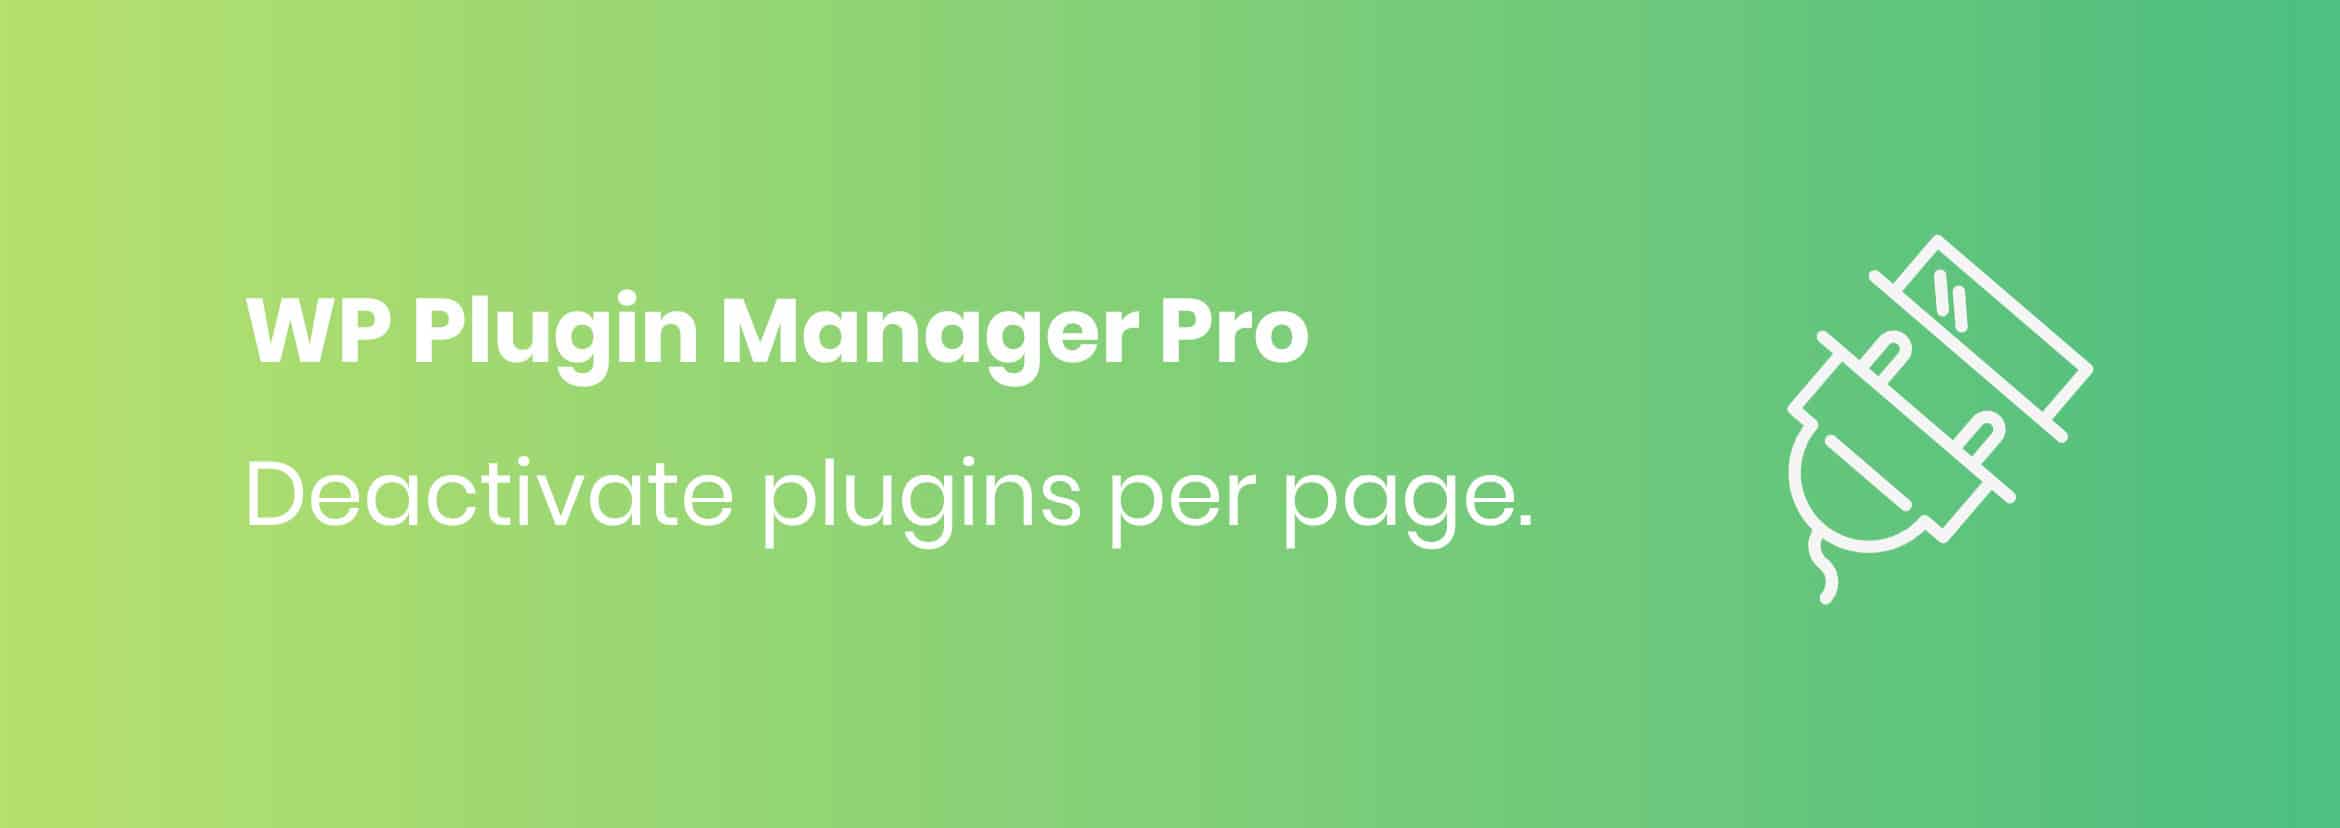 WP Plugin Manager Pro